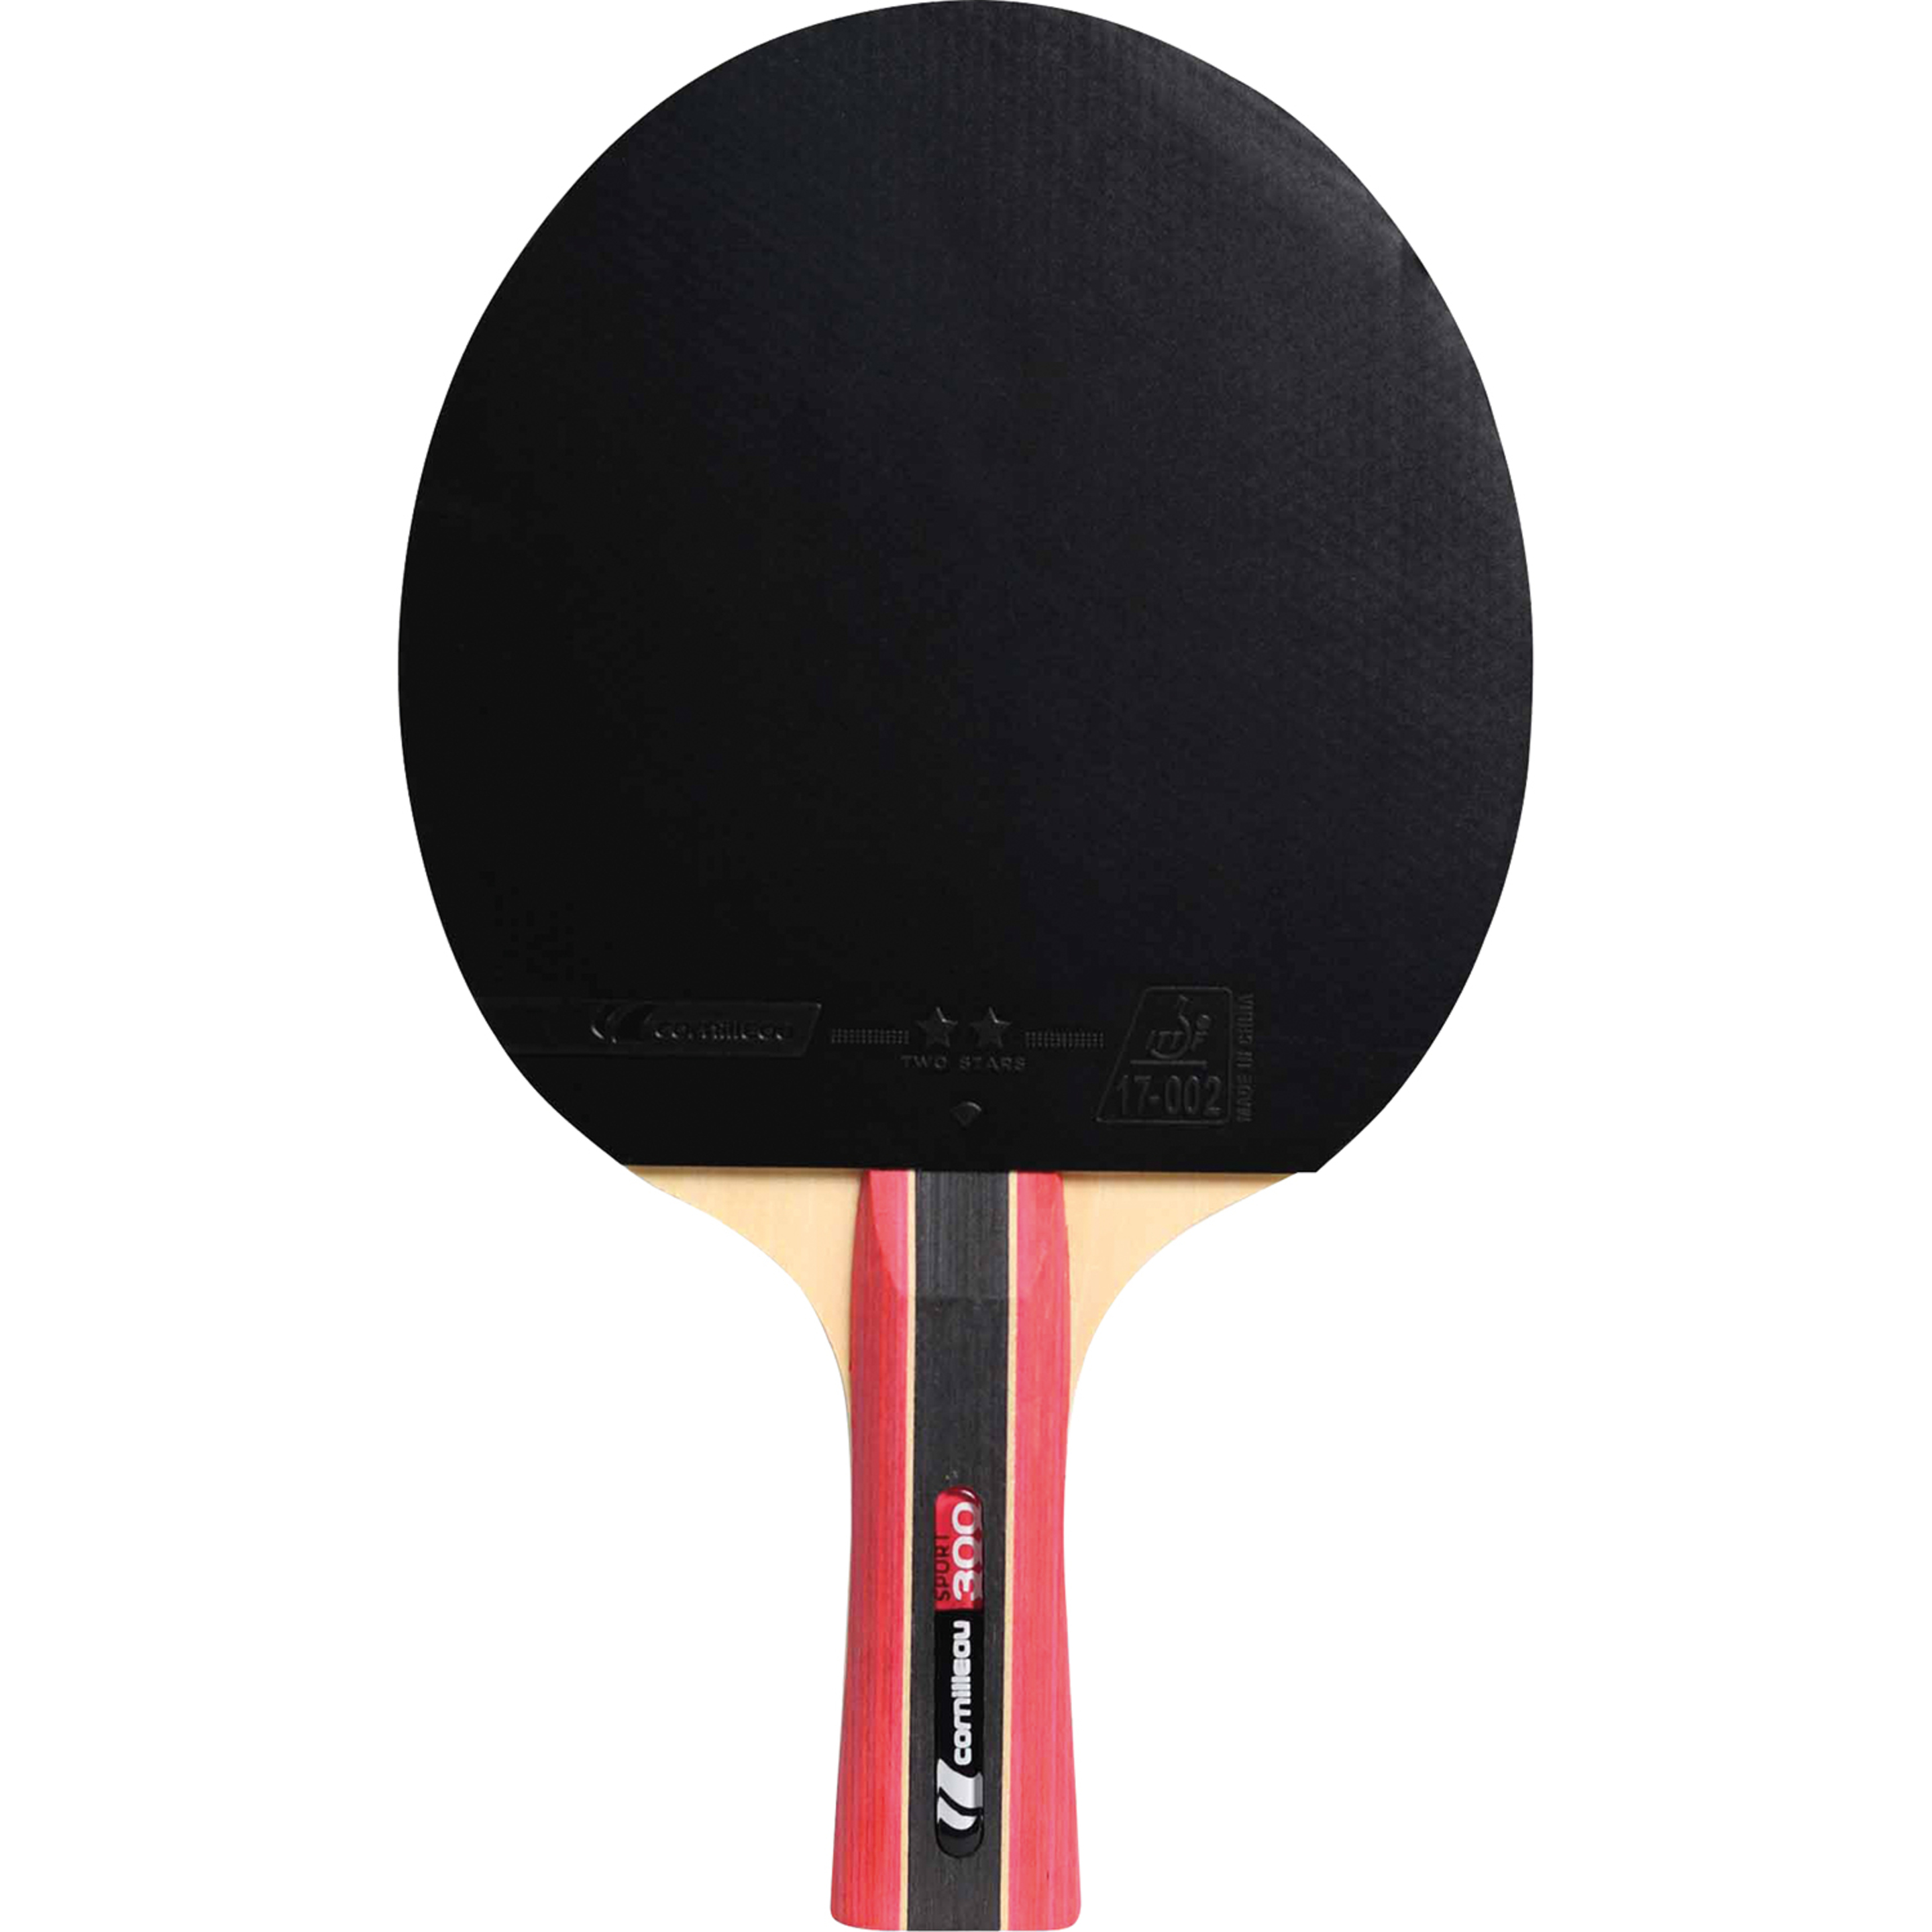 Raquete Ping Pong Cornilleau Sport 300